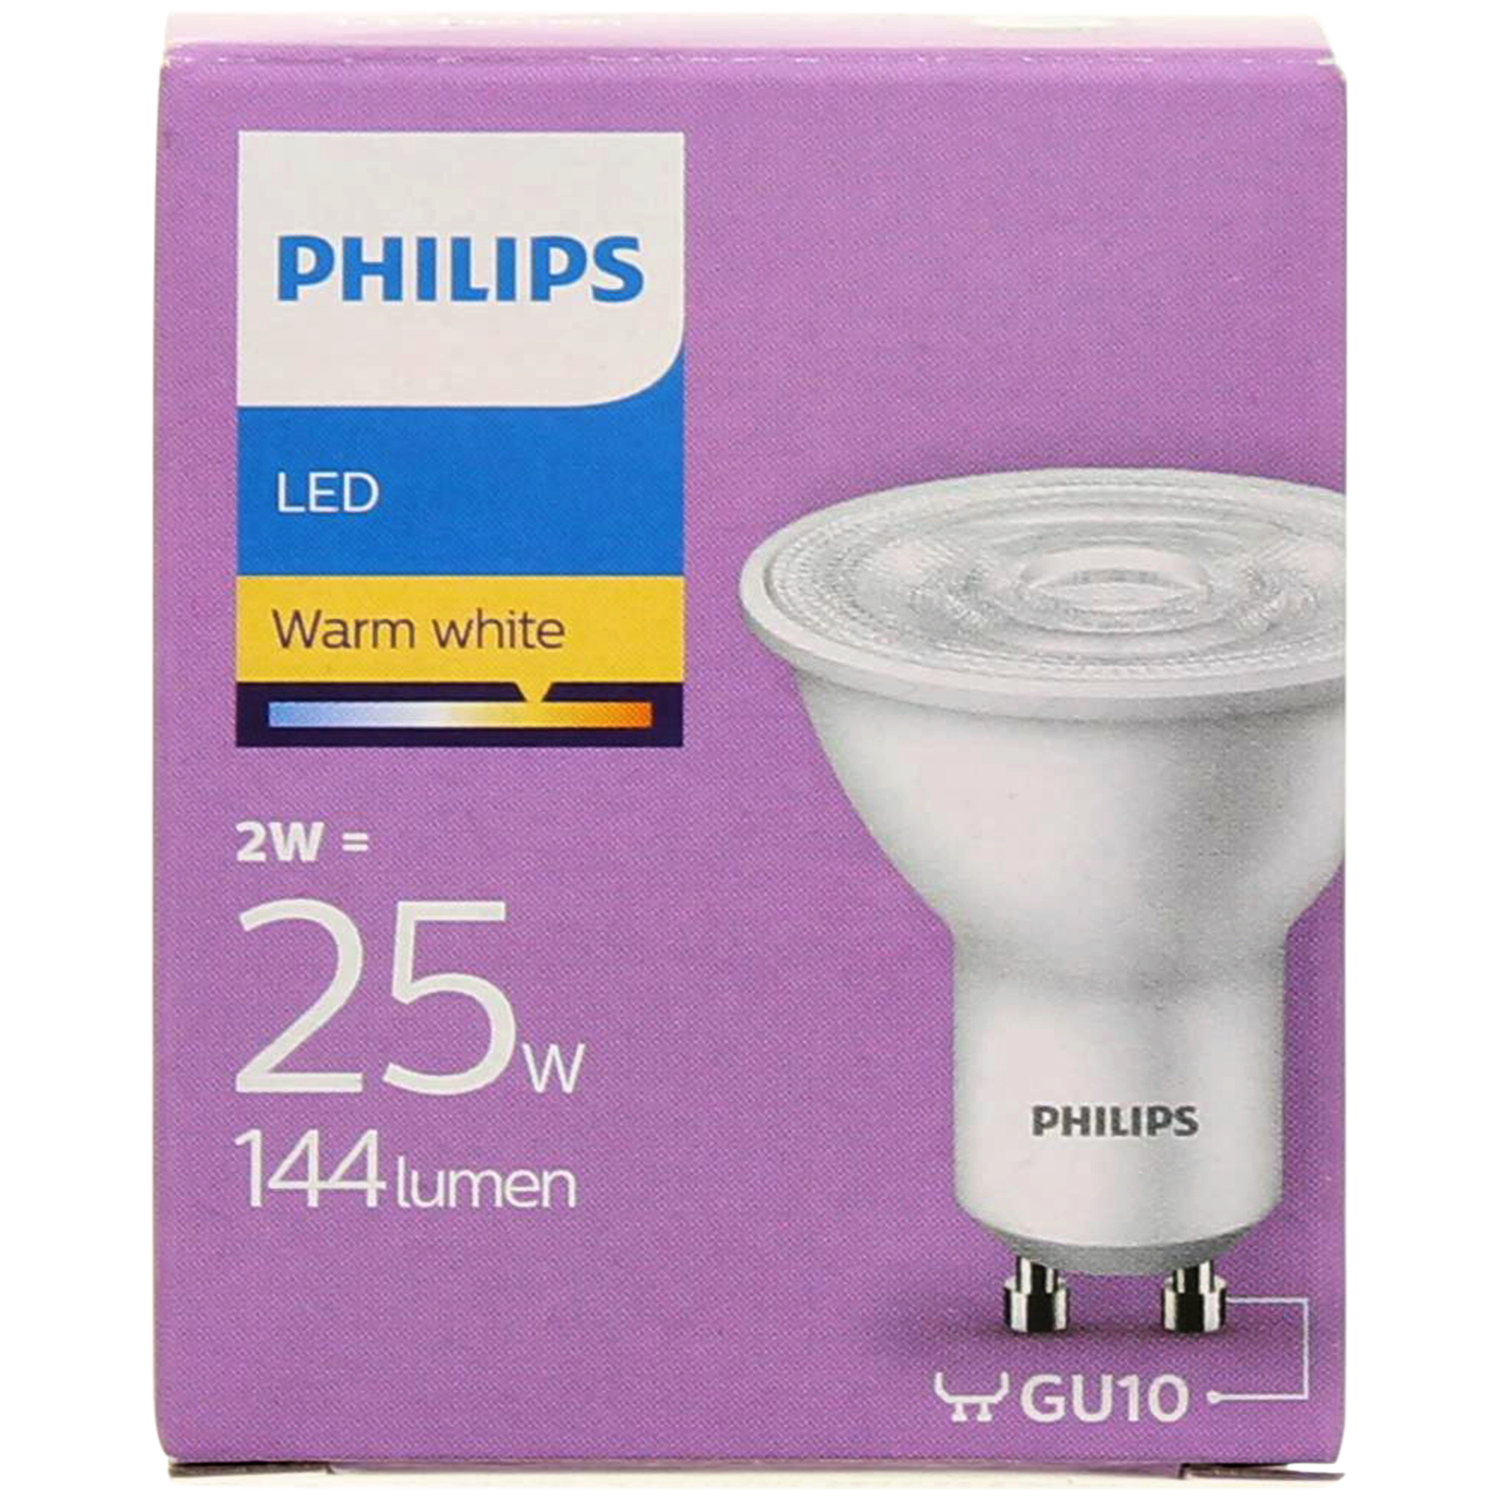 philips ledlamp reflector action com